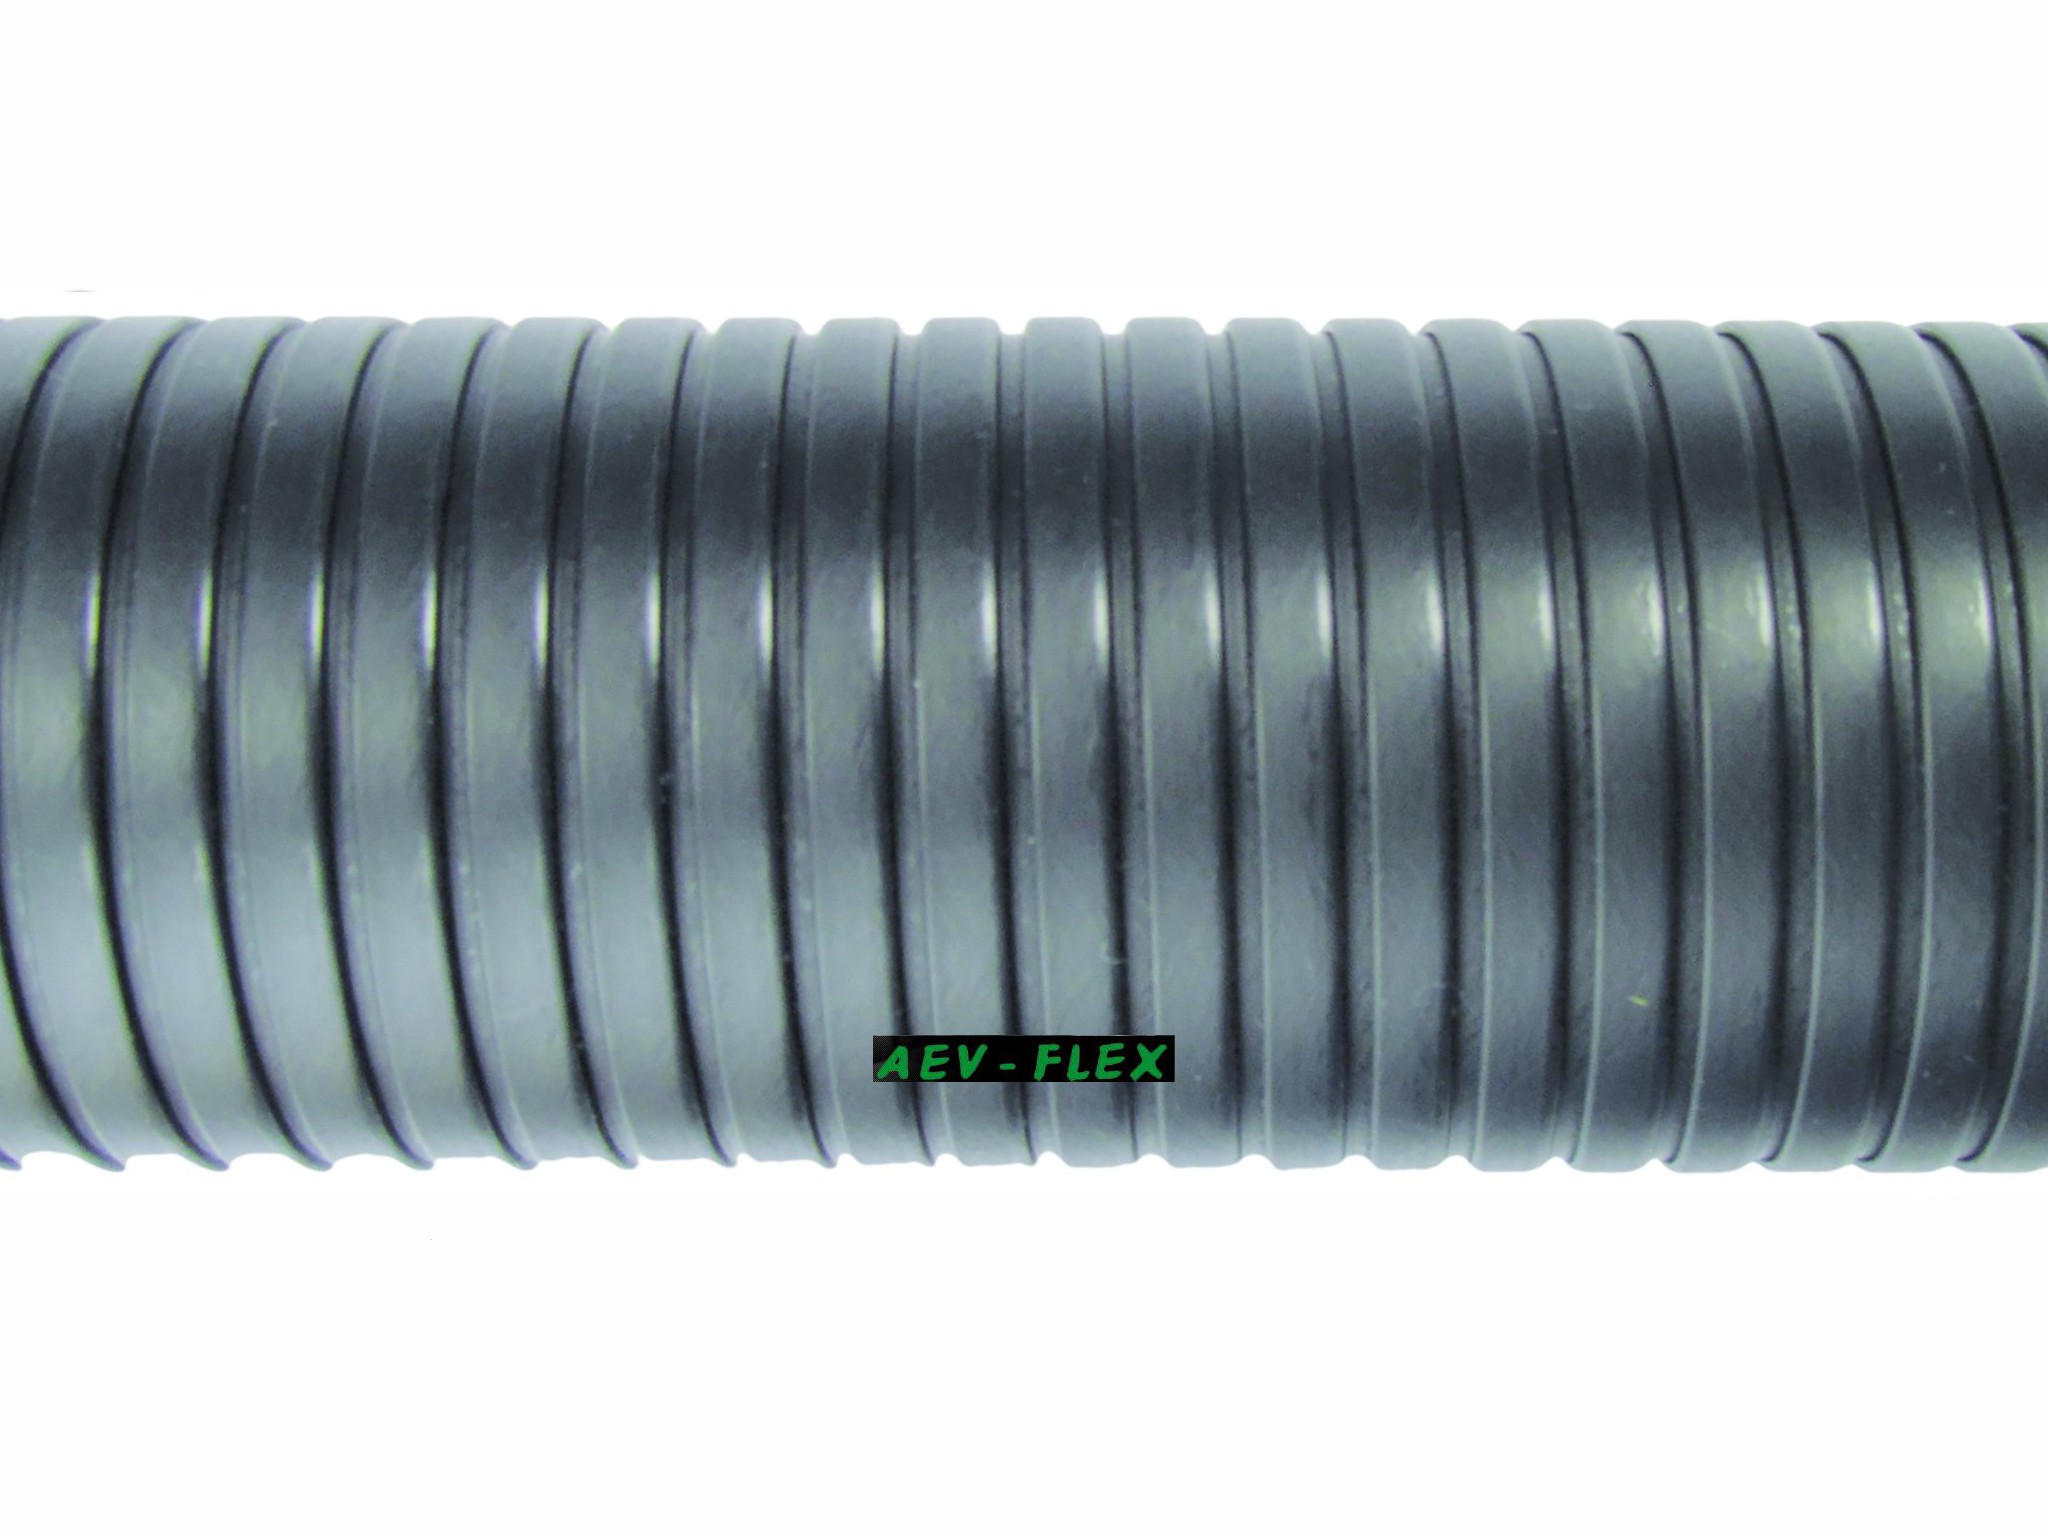 1m80 de tuyau flexible - 19mm de diamètre - ATTWOOD